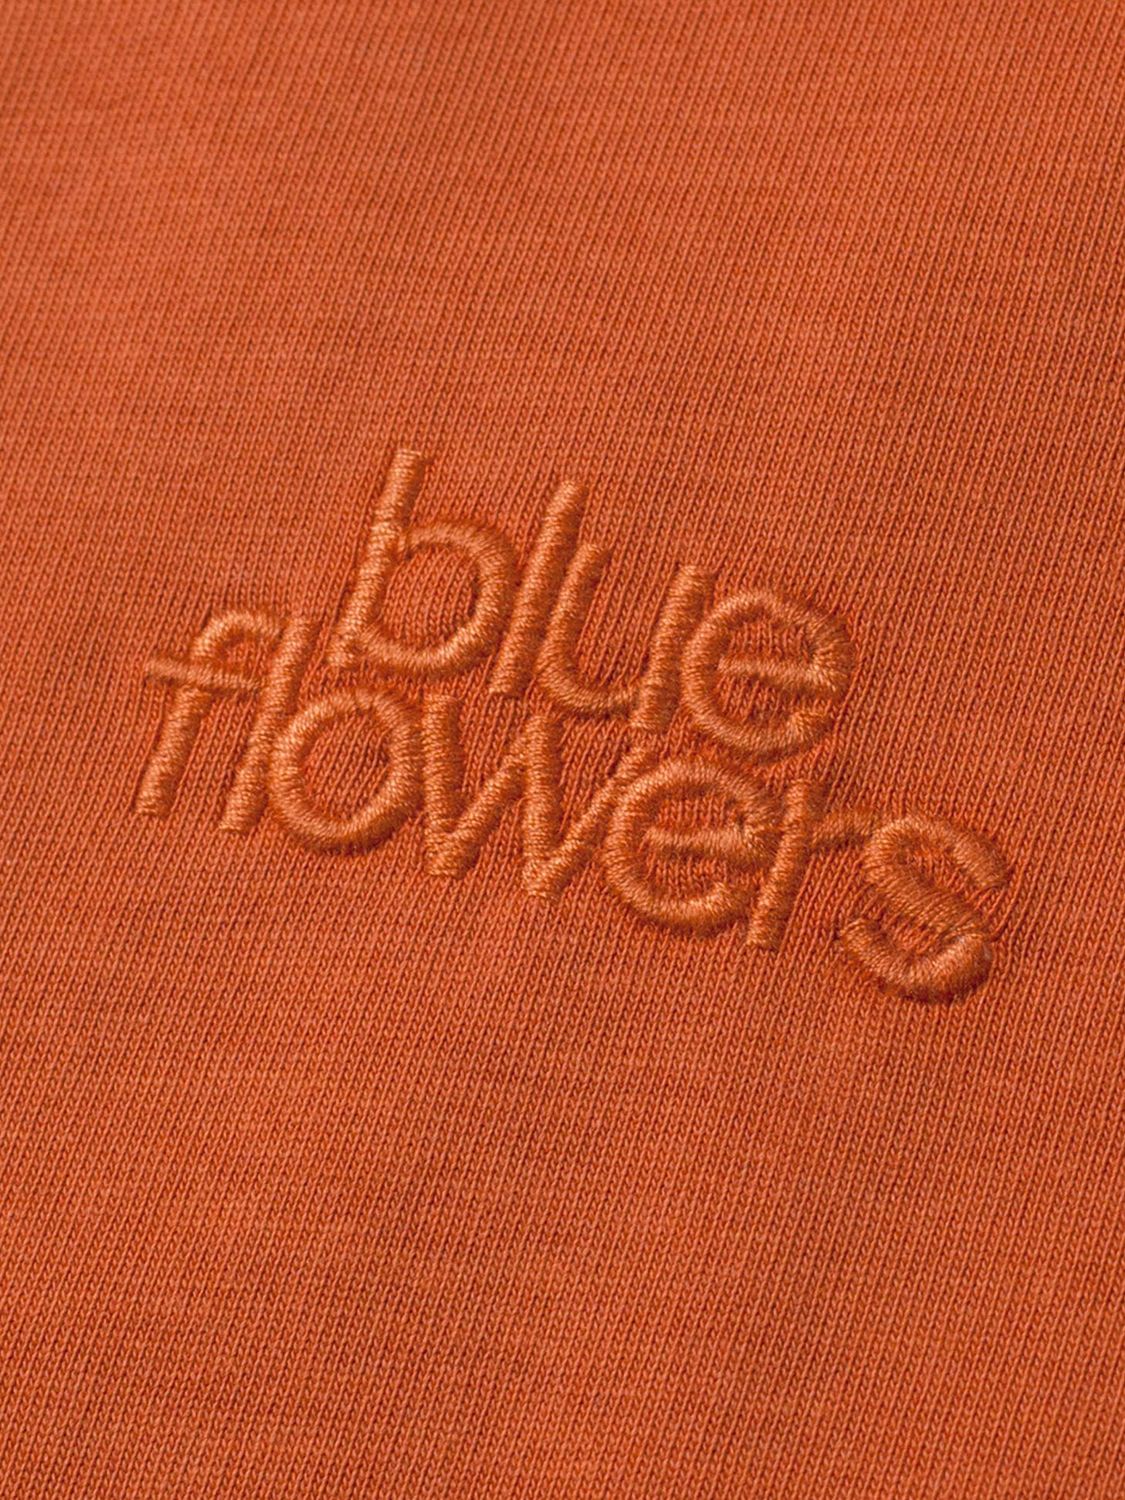 Blue Flowers Rumble T-Shirt, Dark Orange, L